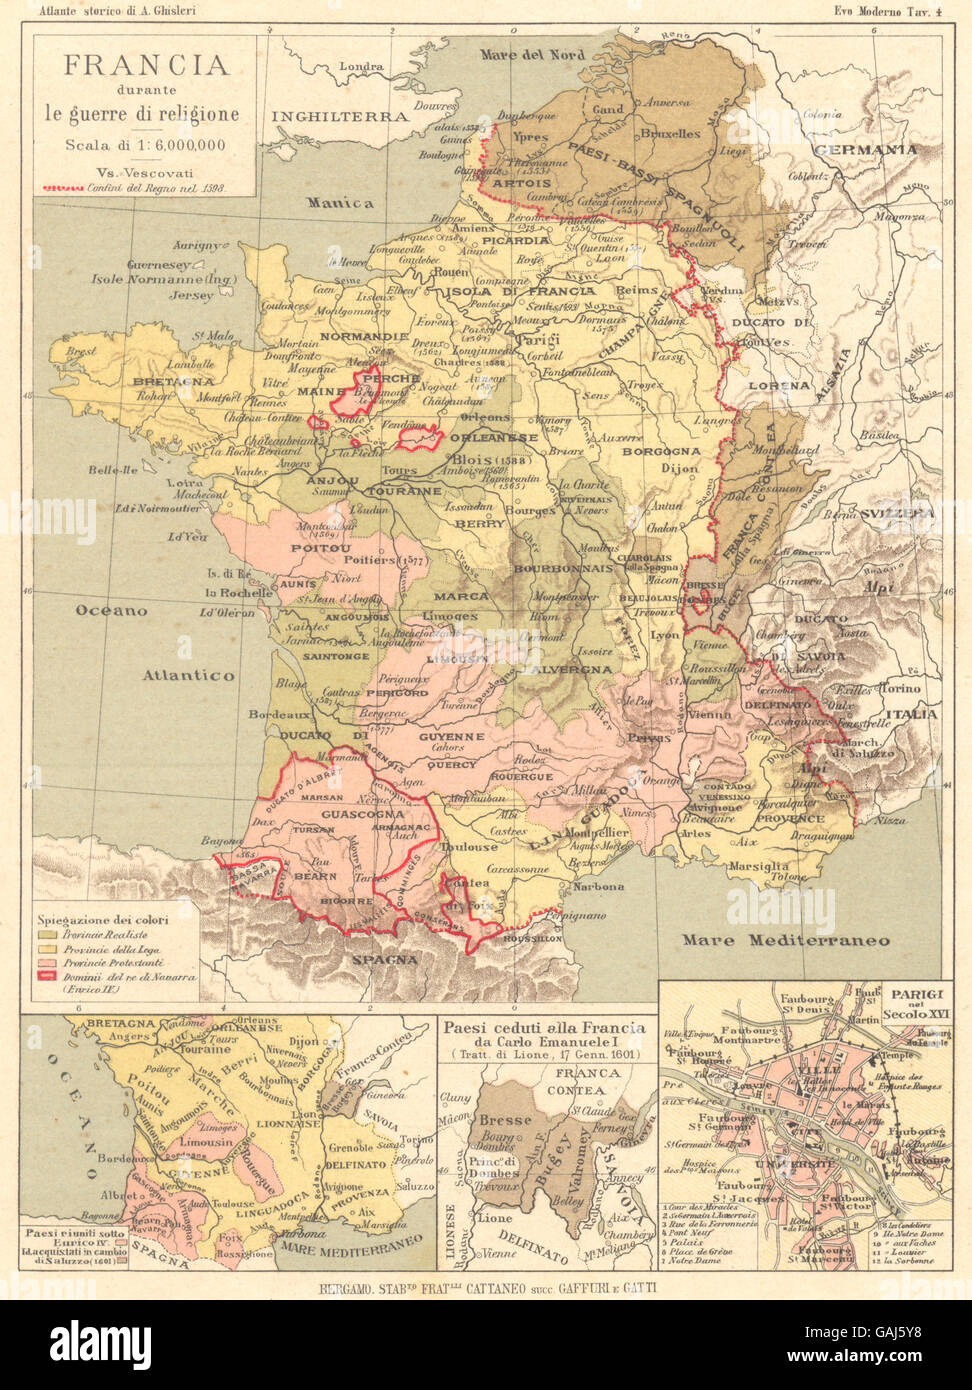 FRANCIA: guerra religione; Carlo Emanuele; Parigi(Paris)Secolo 16, 1889 map Stock Photo